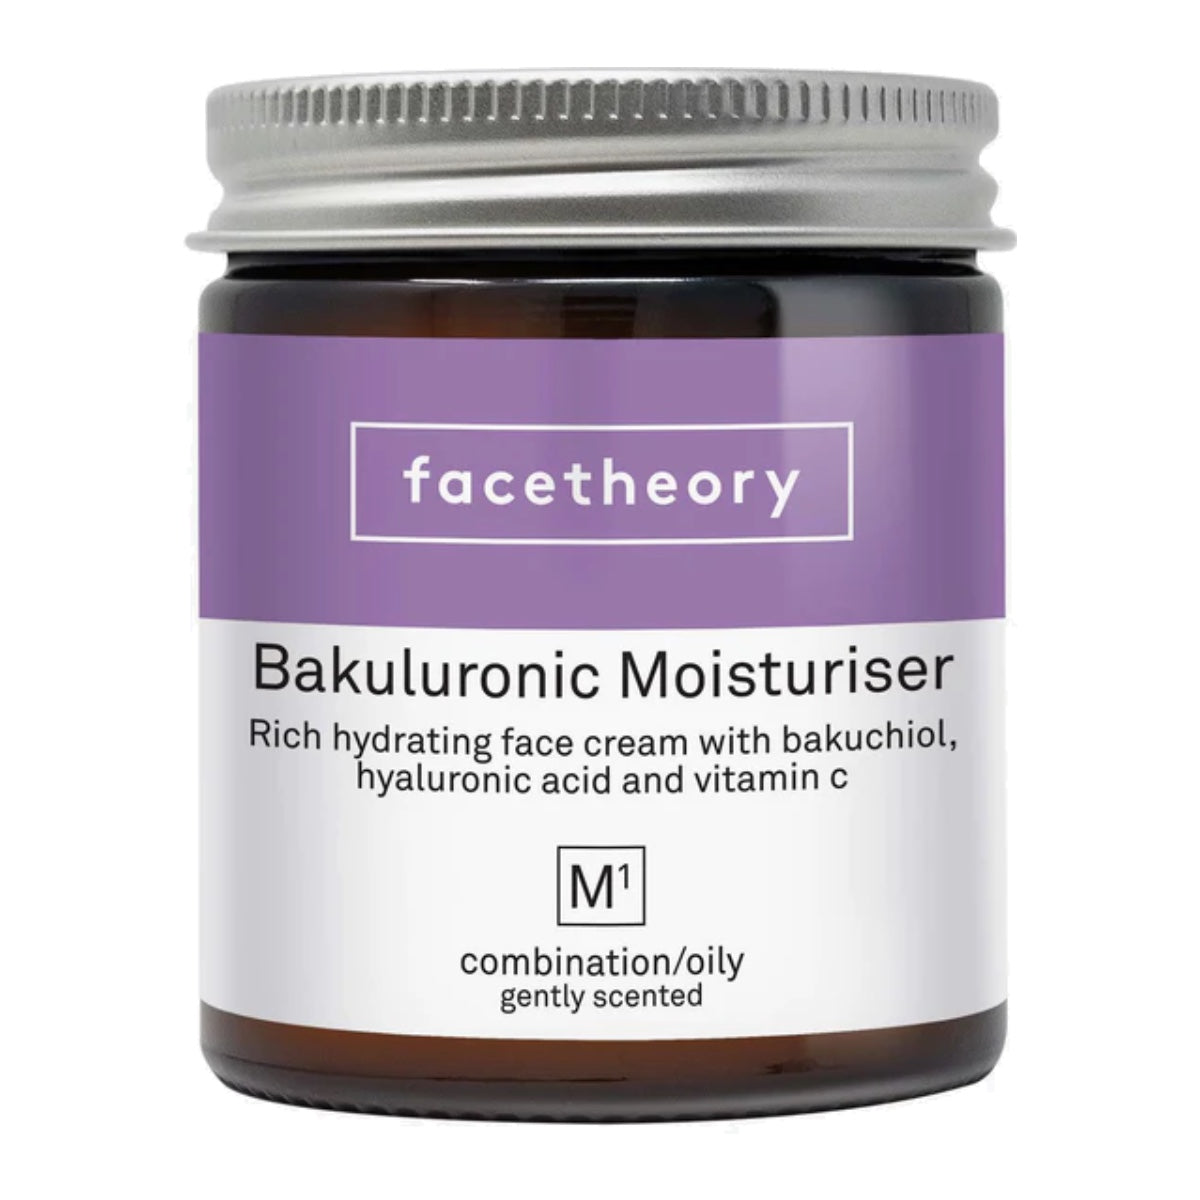 Facetheory Bakuluronic Moisturiser M1 with 2% Bakuchiol, Hyaluronic Acid & Vitamin C50 ml